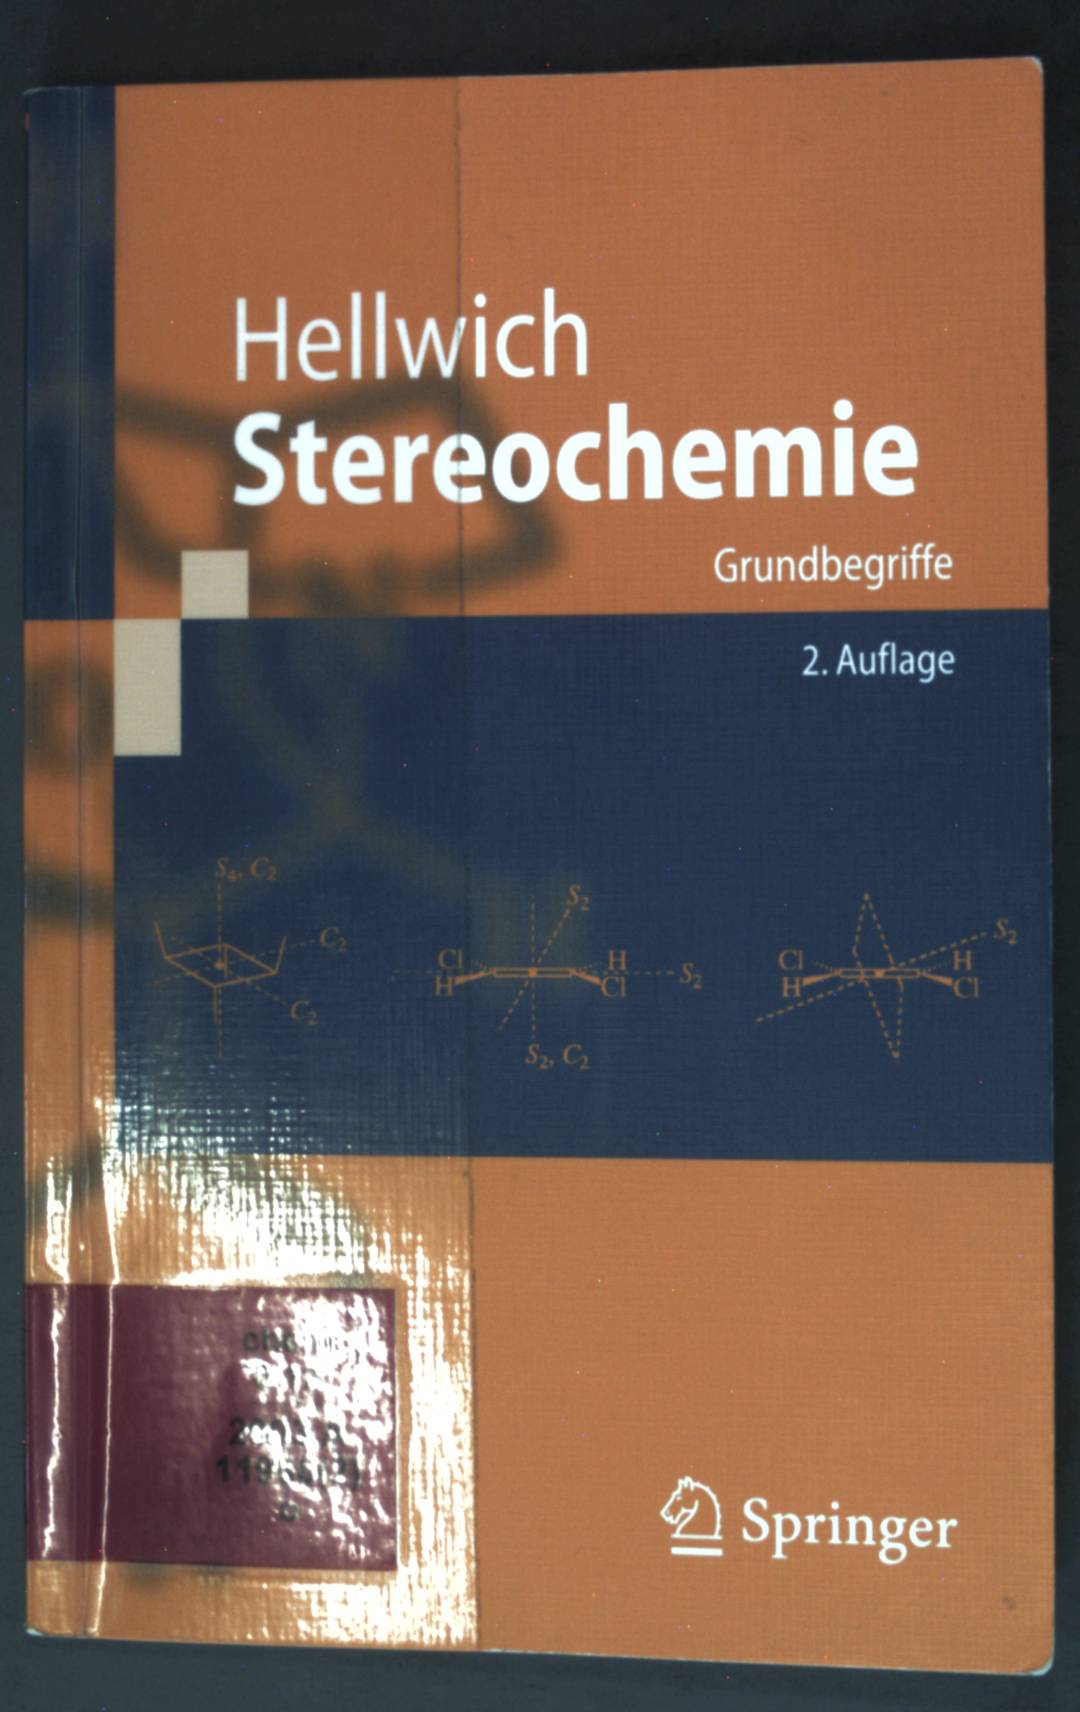 Stereochemie : Grundbegriffe. - Hellwich, Karl-Heinz